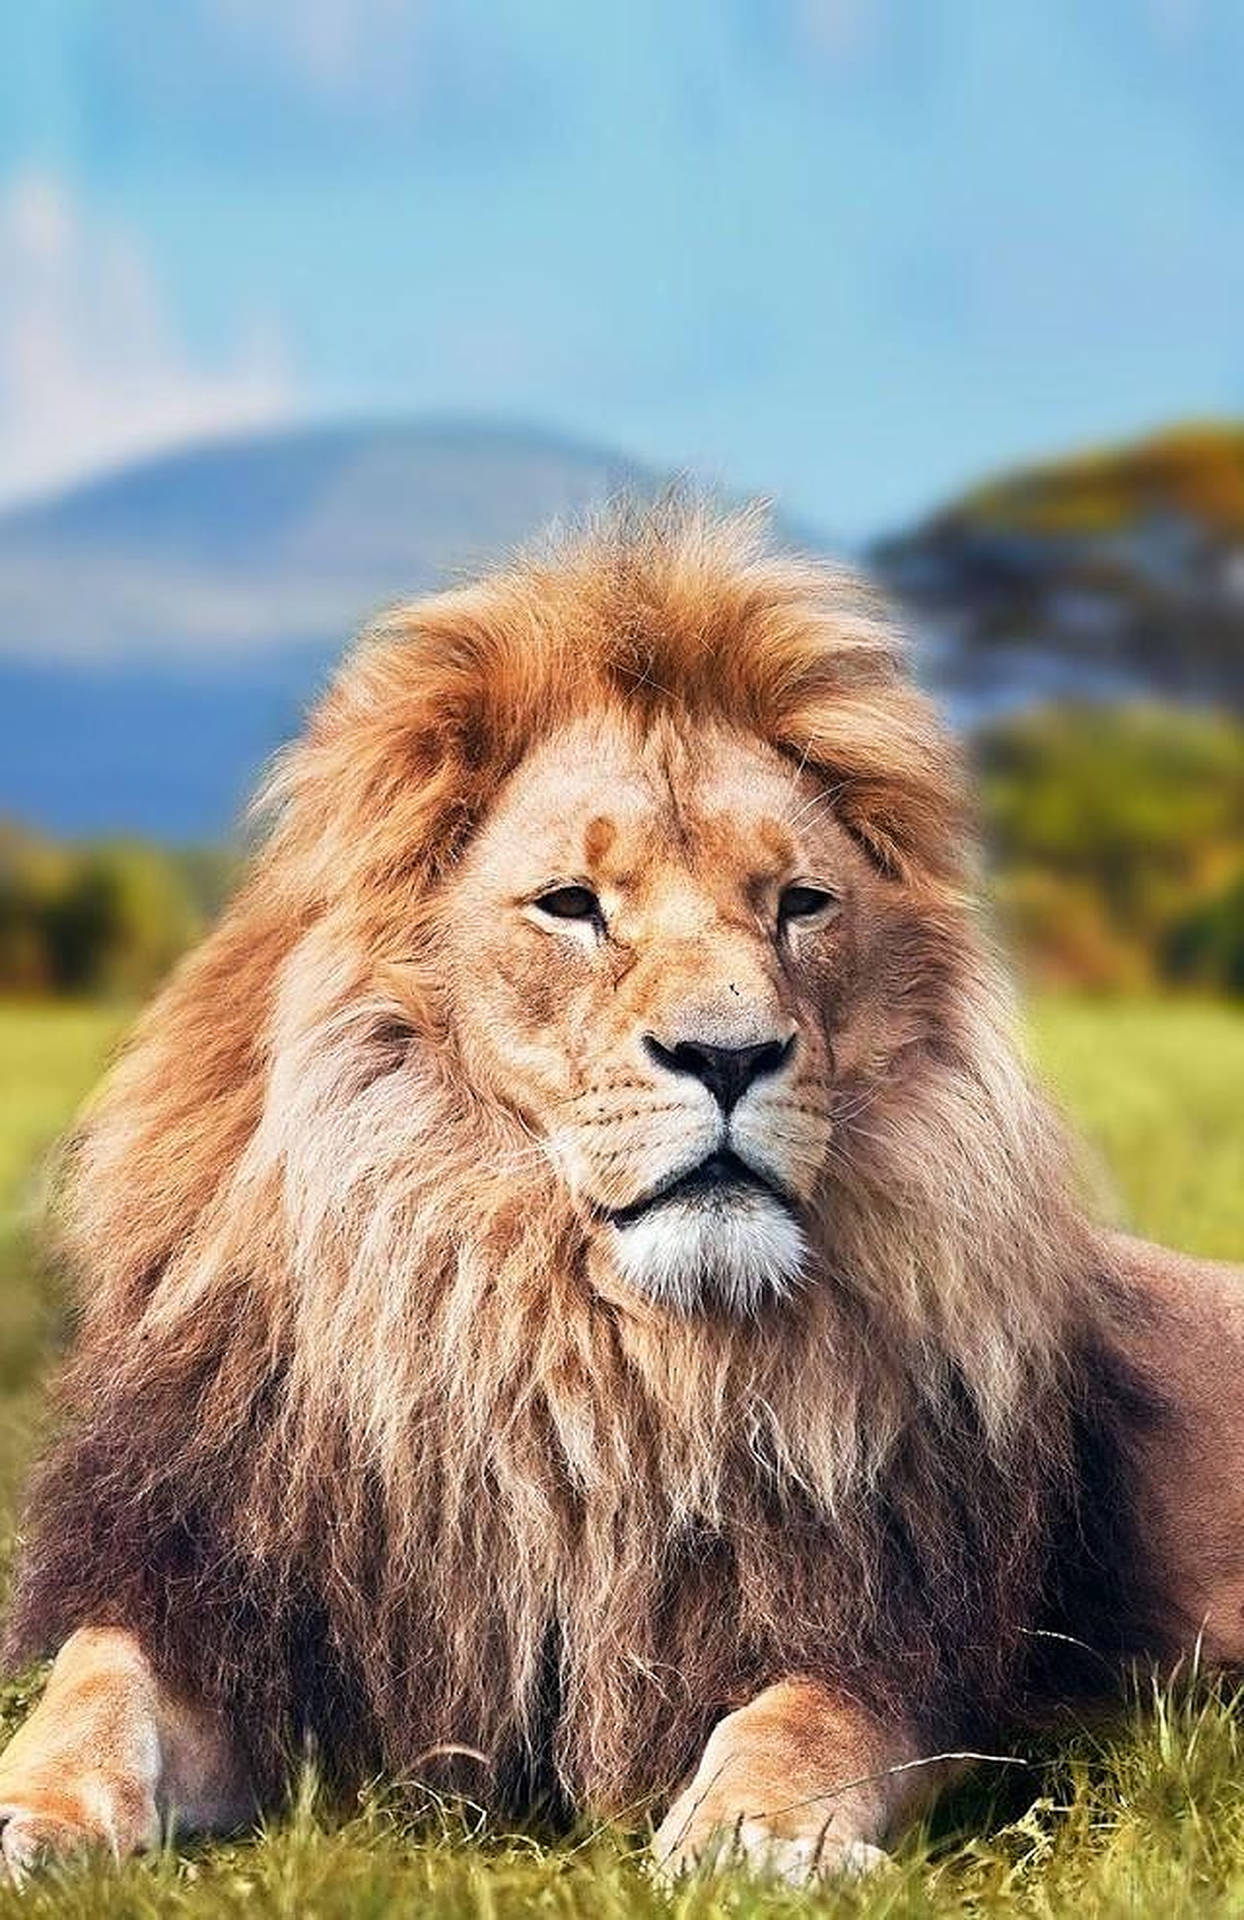 Wild Animal Lion Close-Up Wallpaper